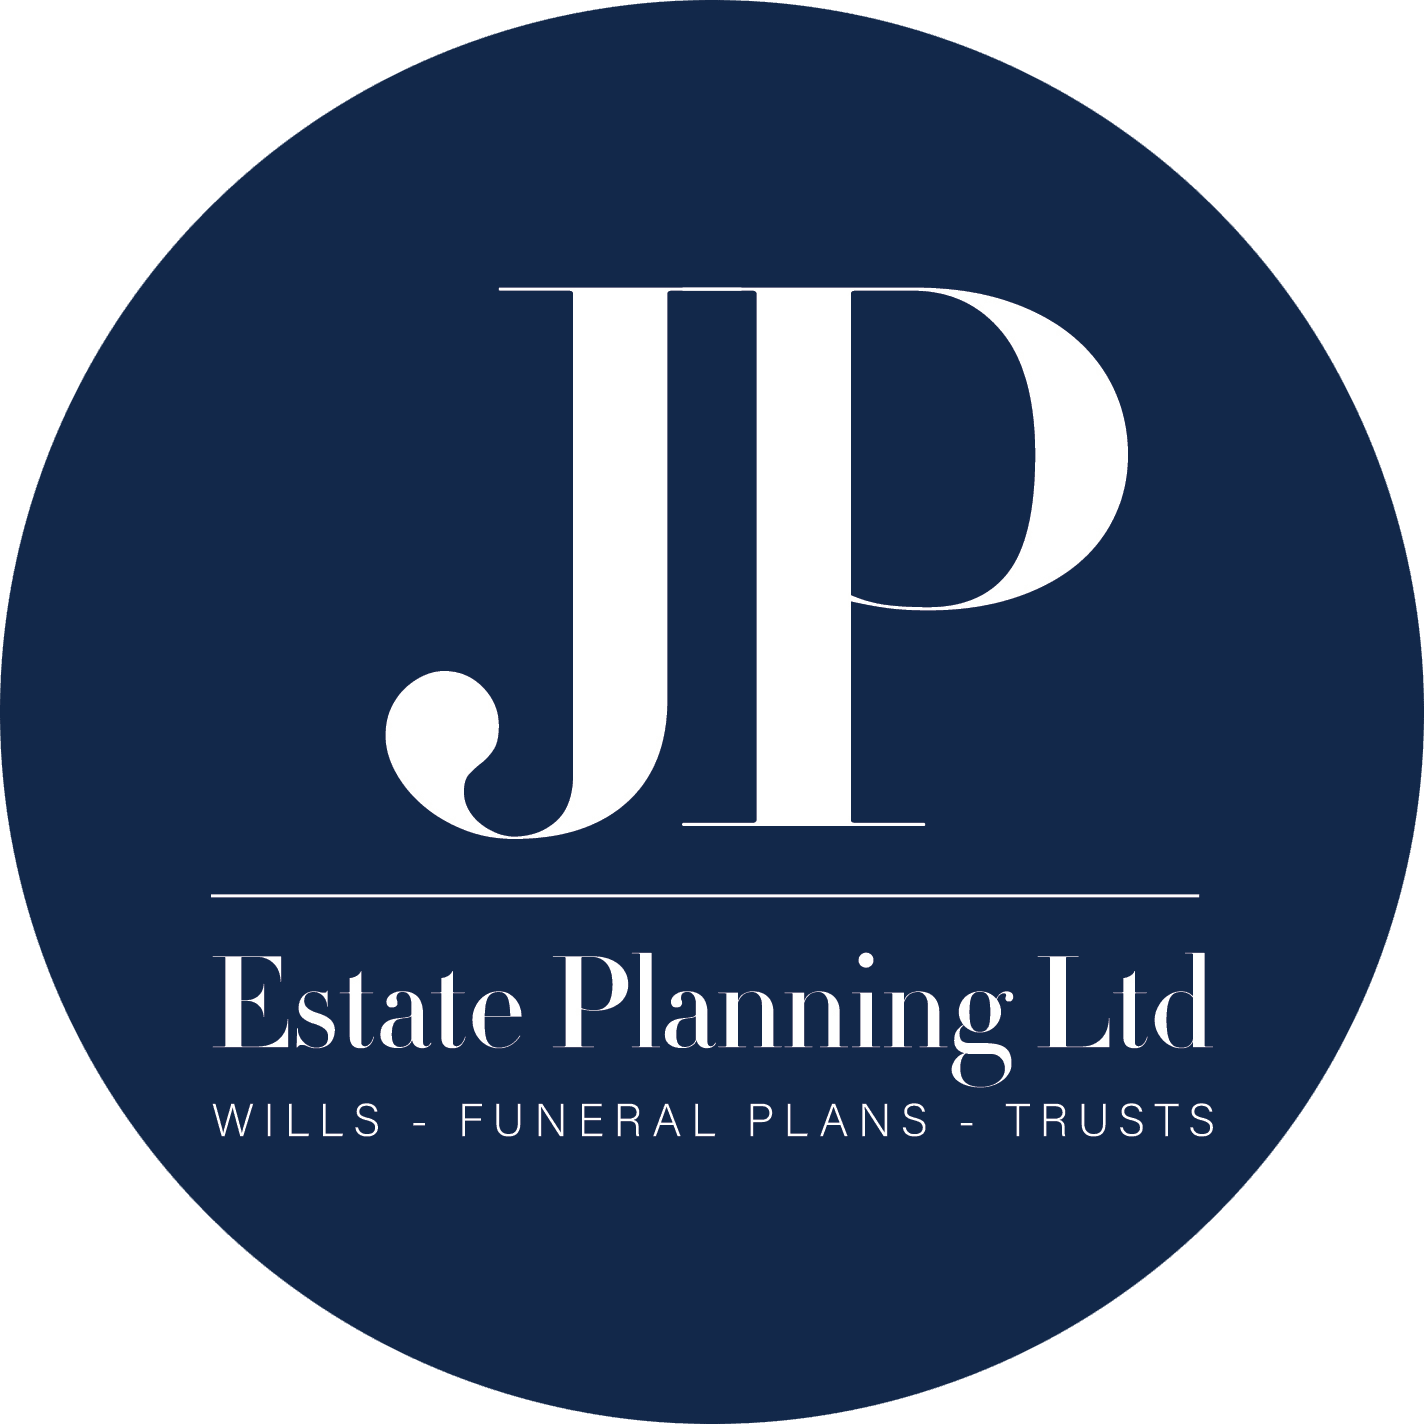 JP Estate Planning Milton Keynes 01908 382192